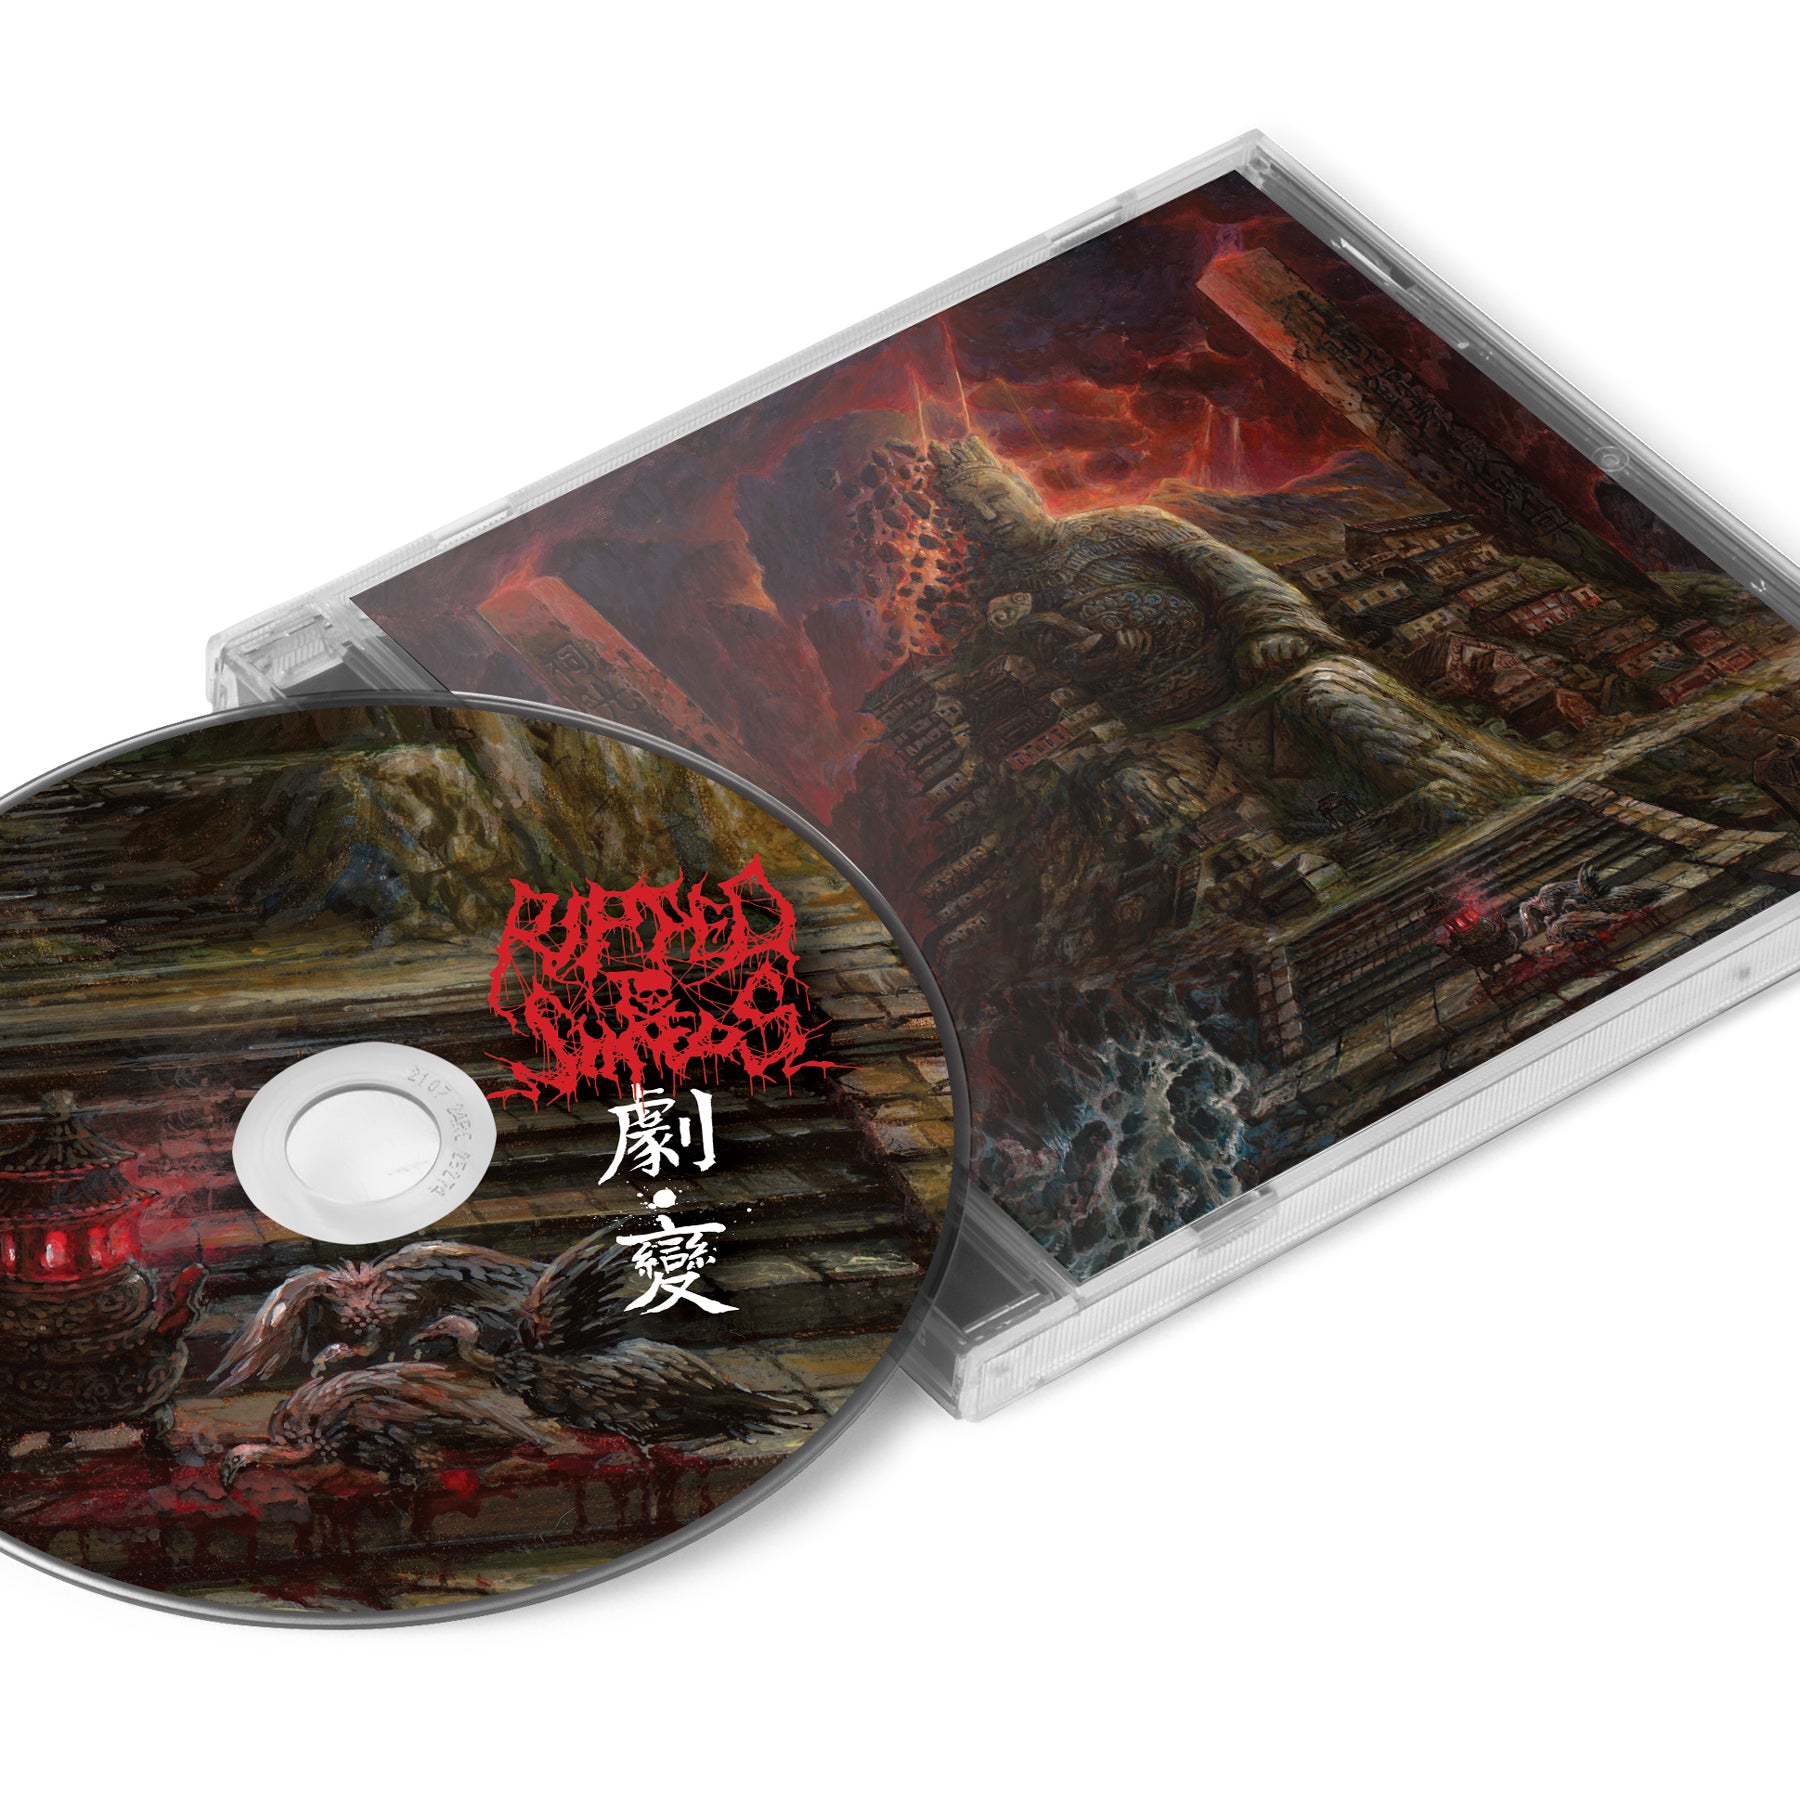 Ripped to Shreds "劇變 (Jubian)" CD